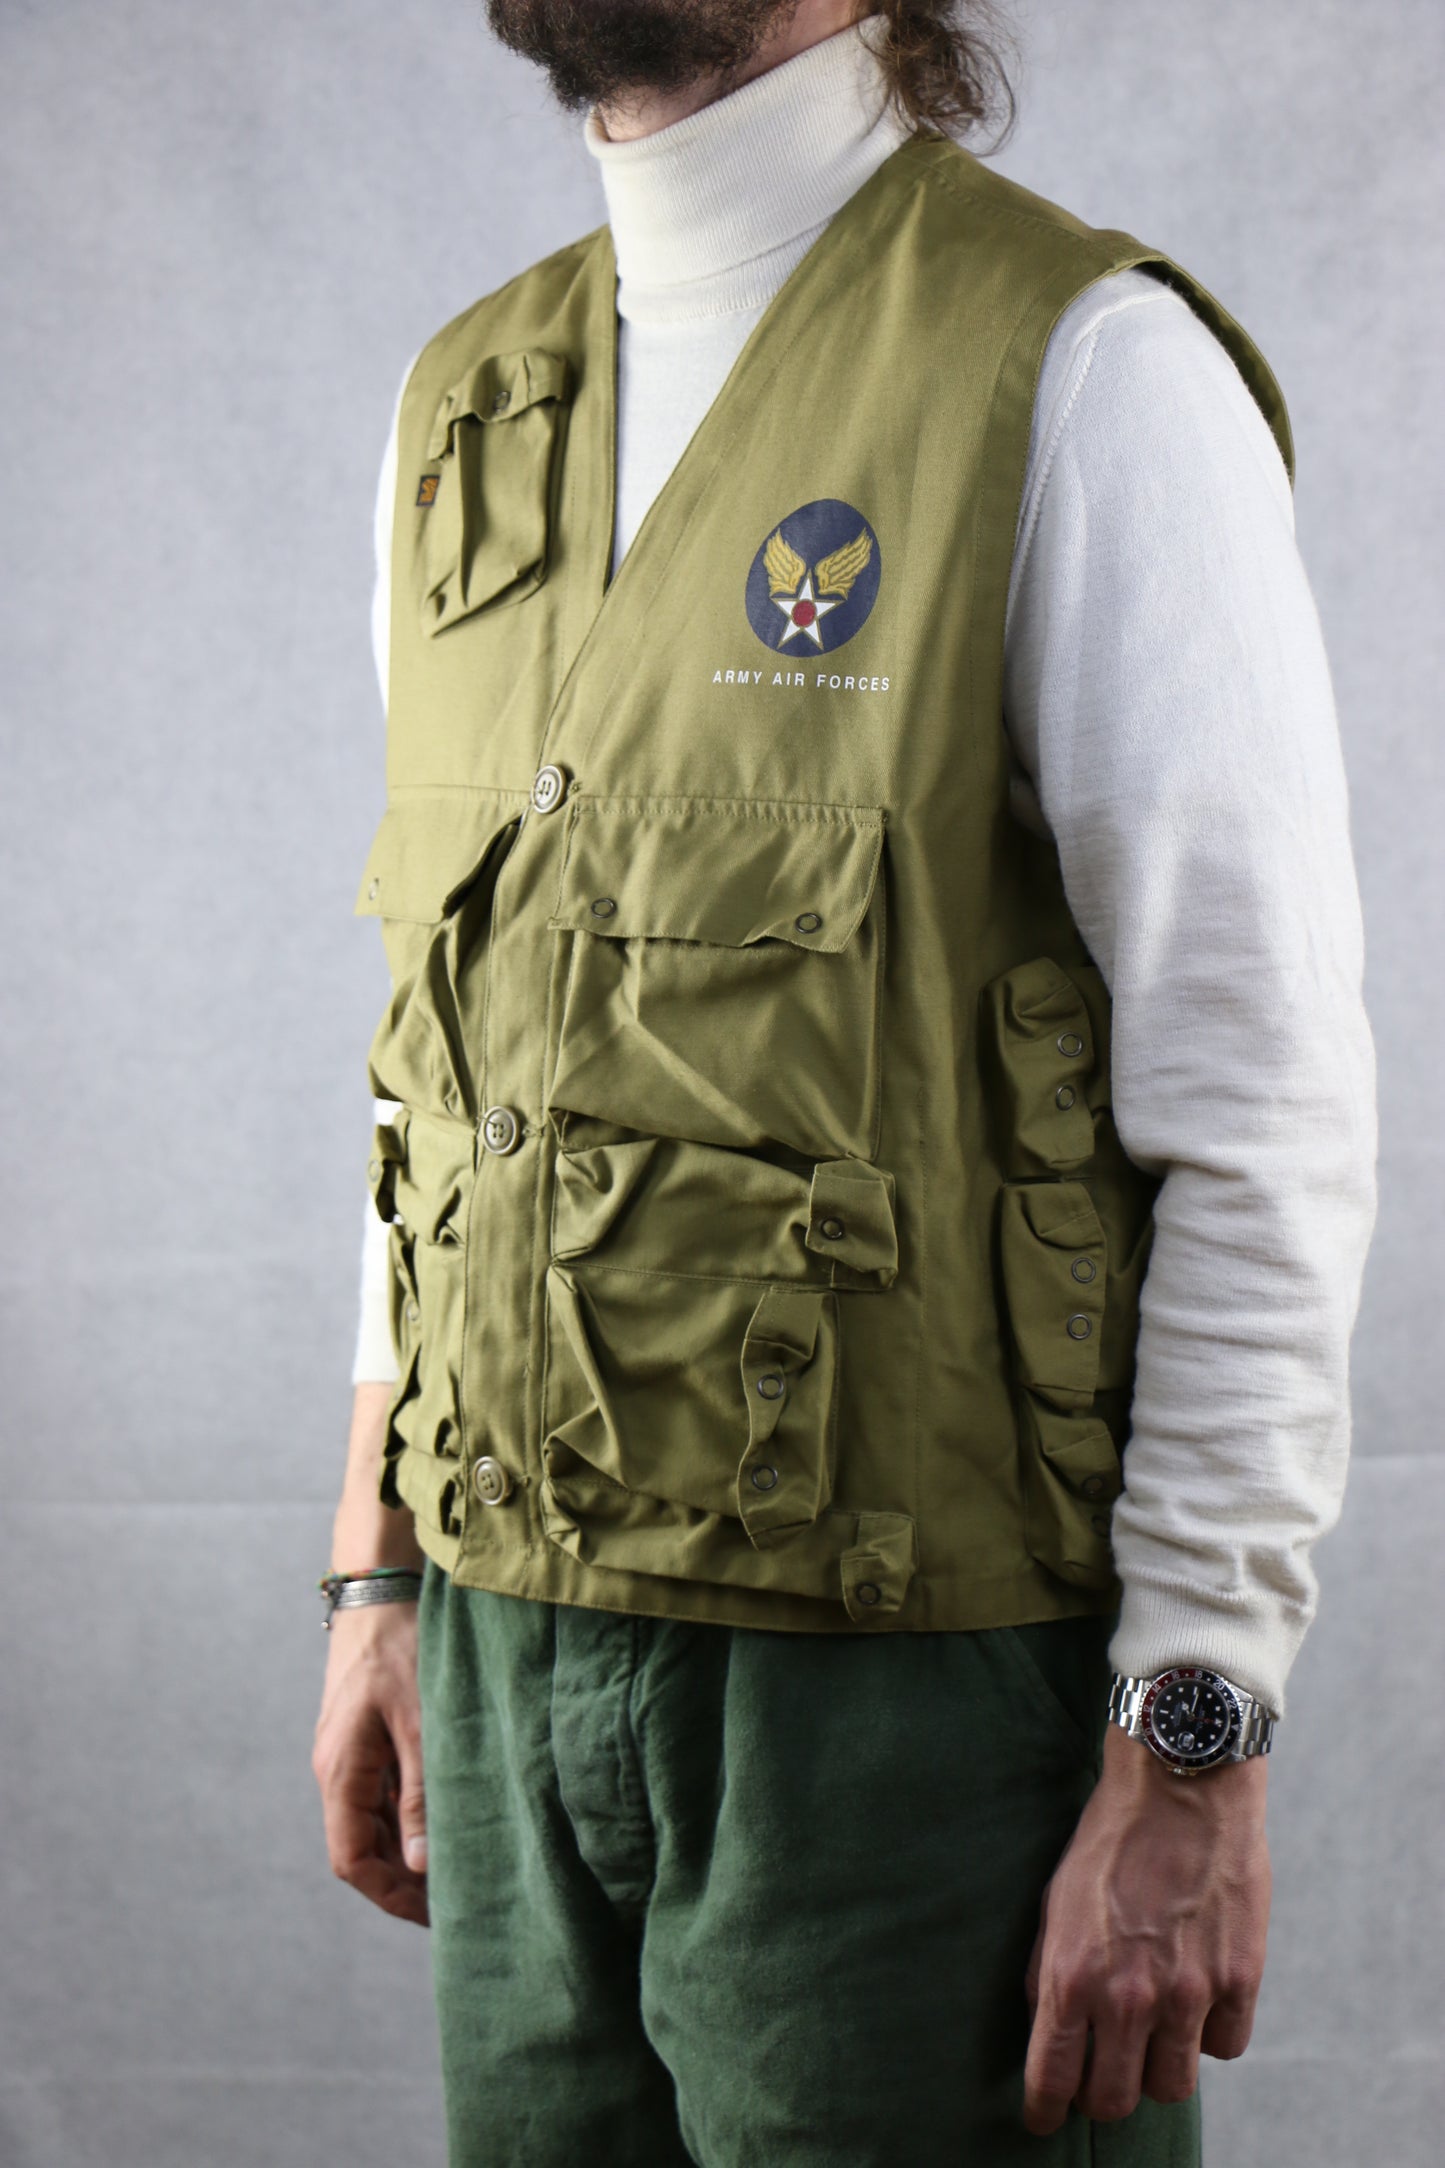 U.S. Army Air Force Vest Alpha Industries  - vintage clothing clochard92.com